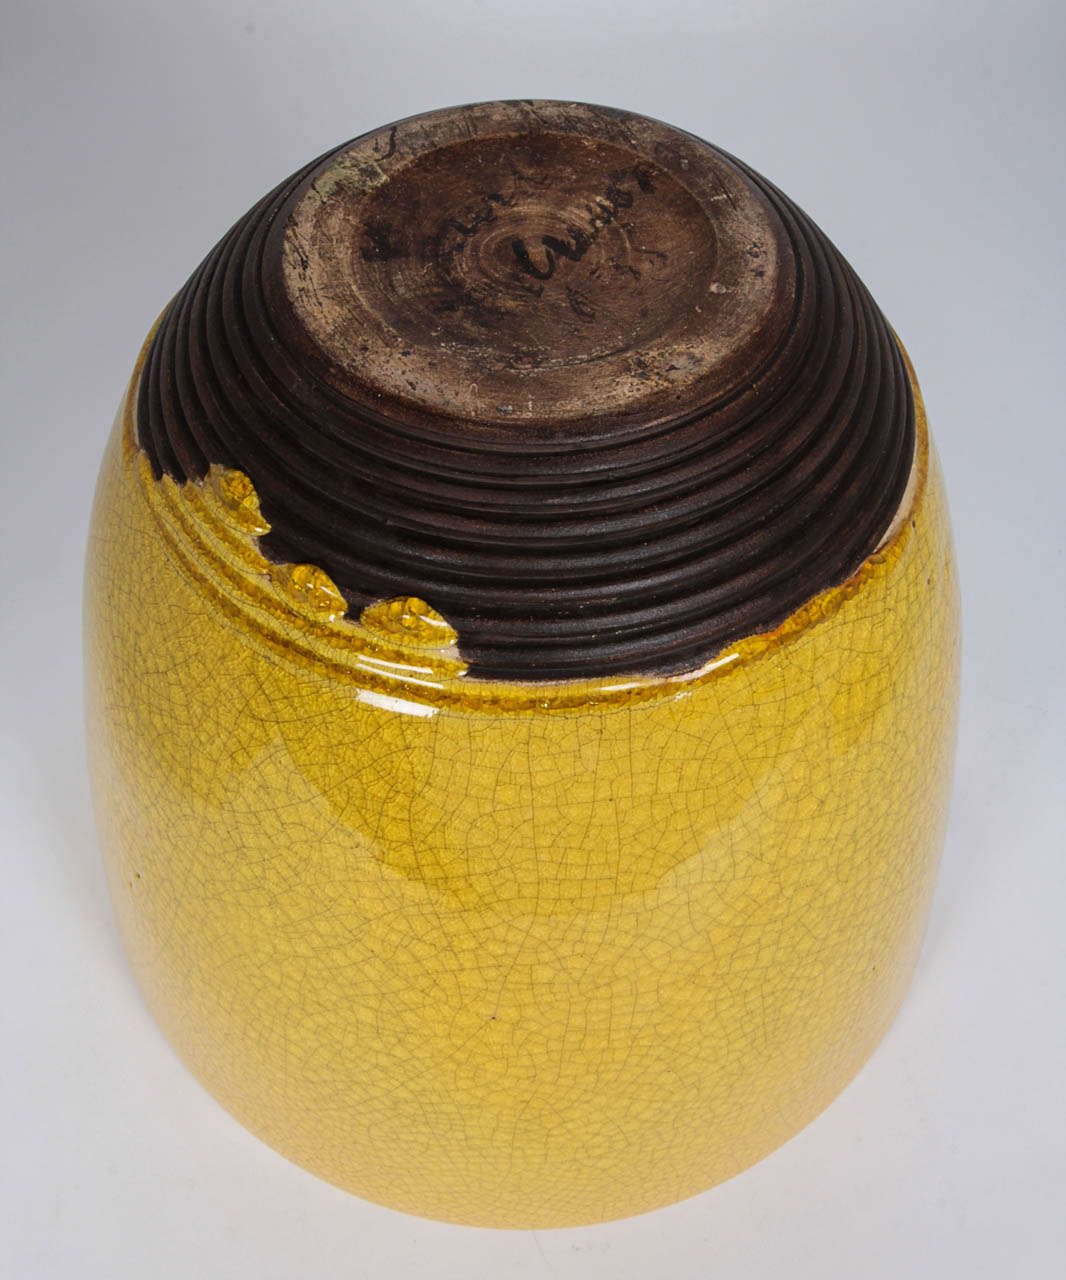 Laura Andreson California Art Pottery Rare, Early American Ceramic Vase, 1935 For Sale 2